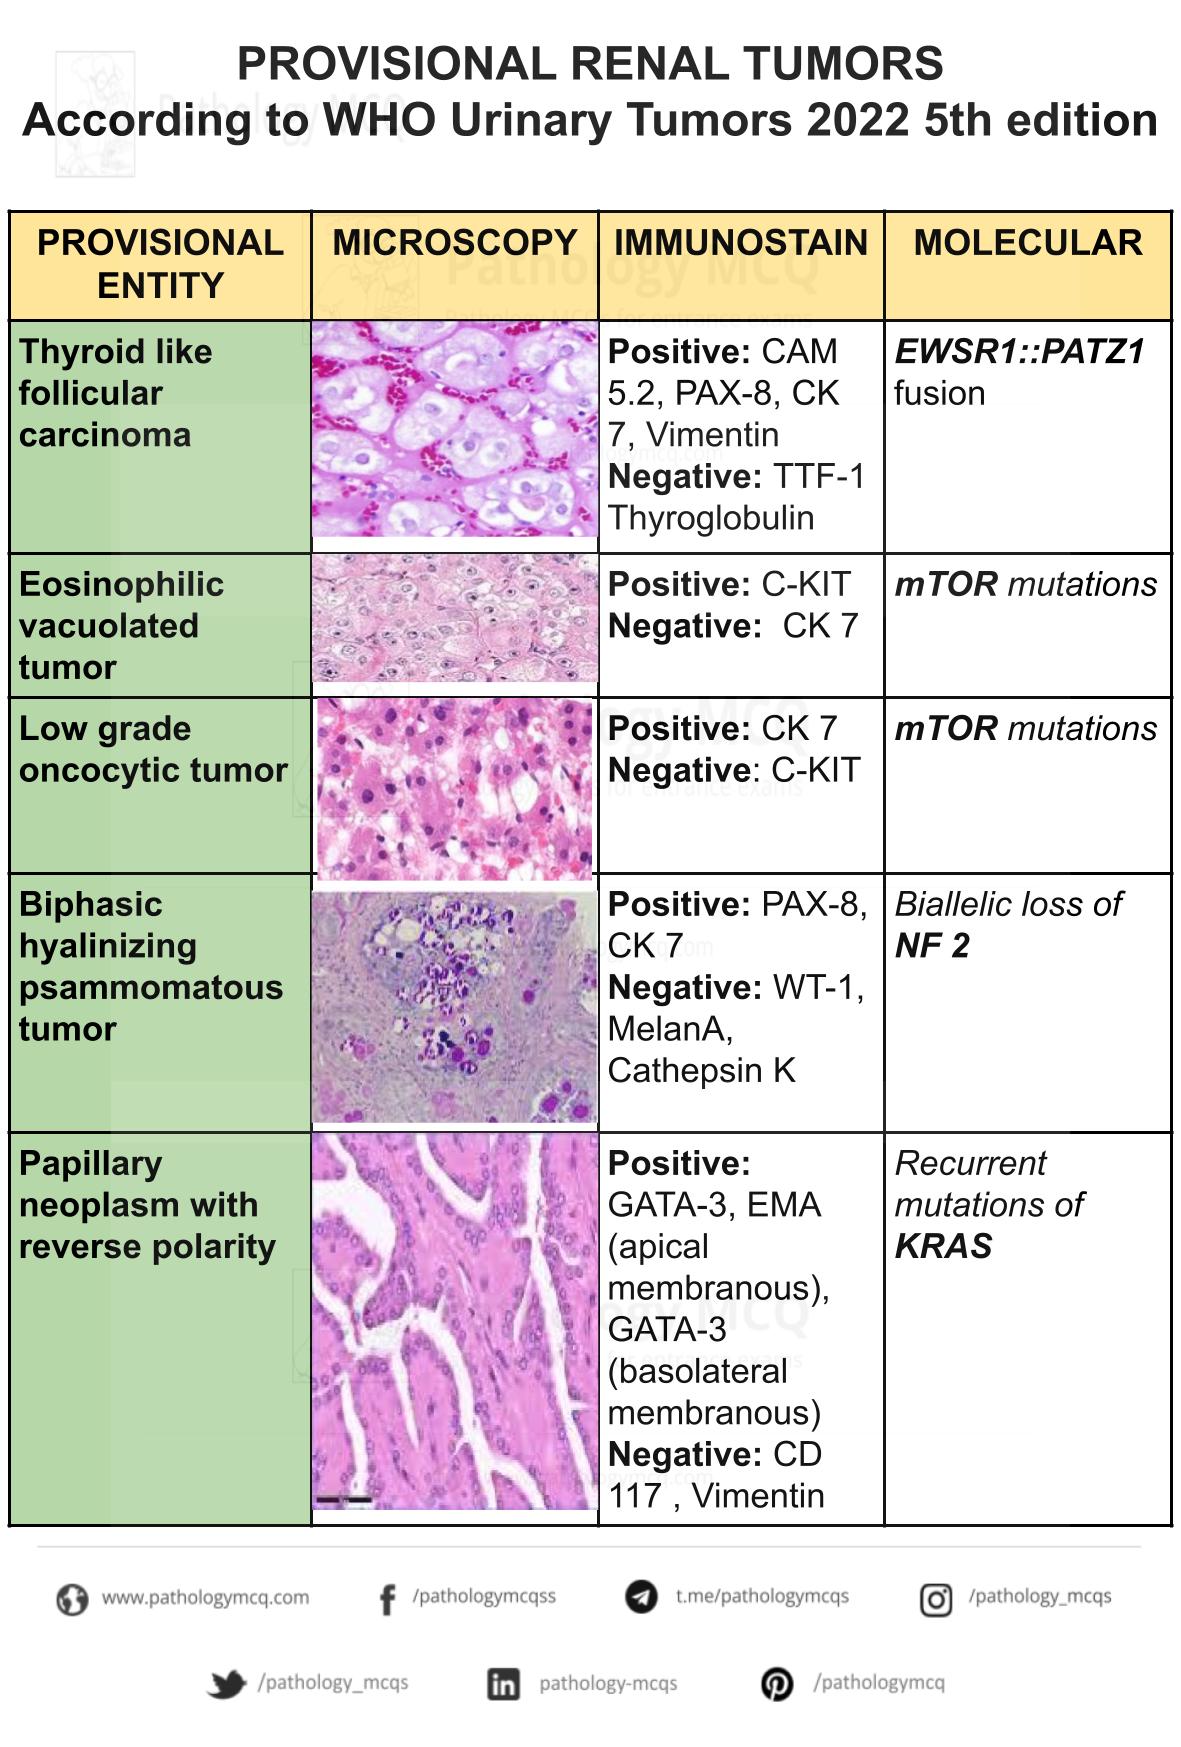 Summary of provisional renal tumors-according to WHO 2022 urinary tumors 5th edition